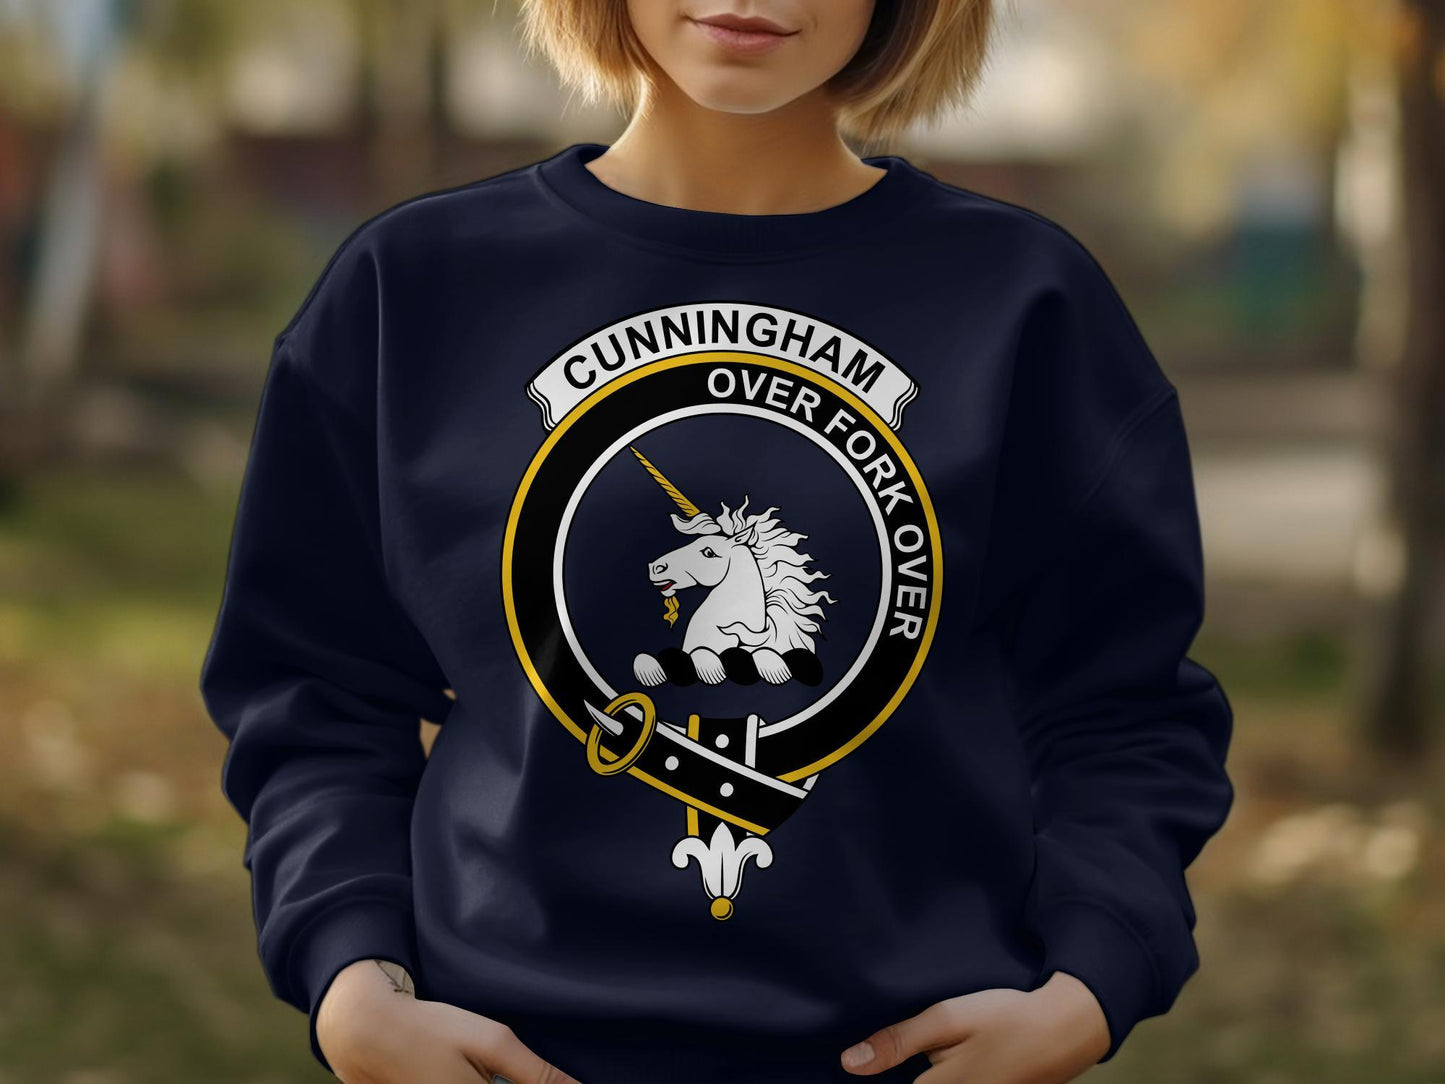 Cunningham Clan Unicorn Crest T-Shirt, Scottish Heritage Apparel, Unisex